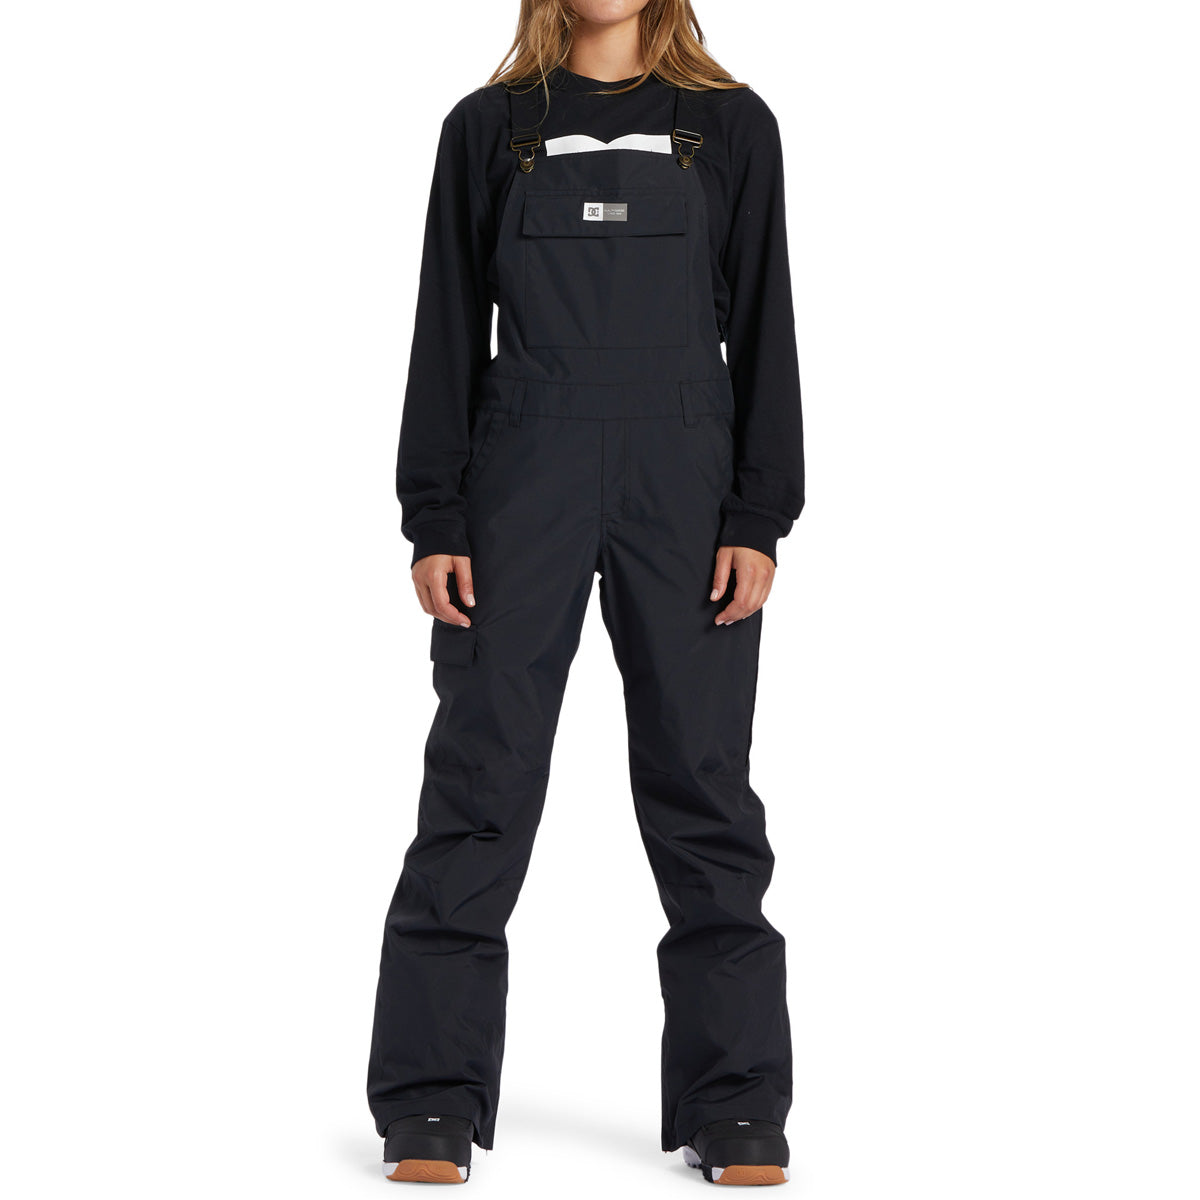 DC Womens Valiant 2024 Bib Snowboard Pants - Black image 1